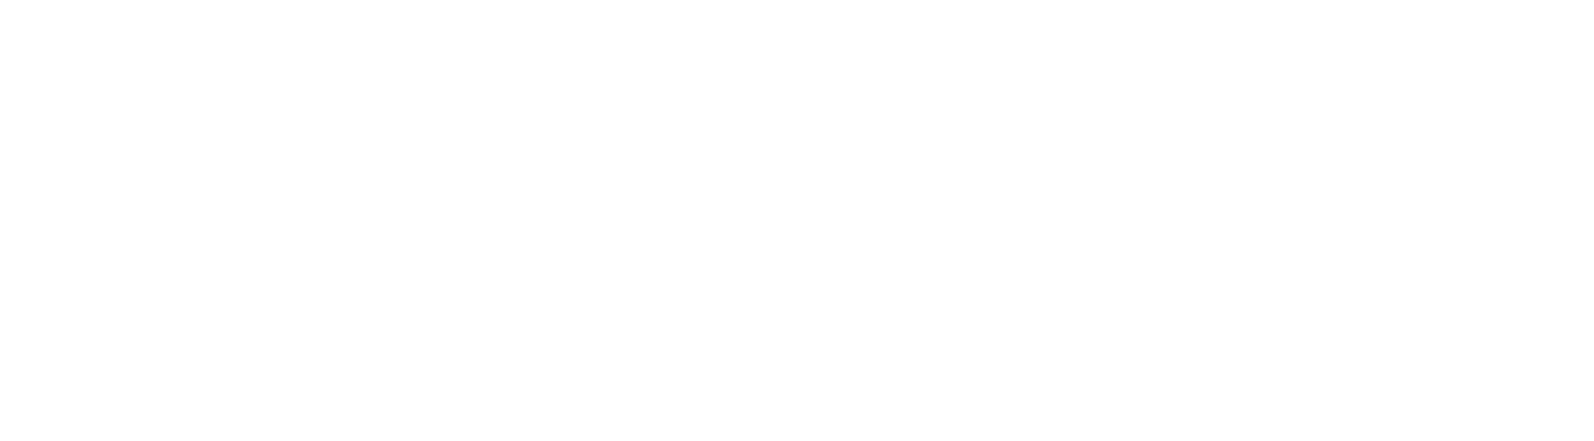 CVRx logo pour fonds sombres (PNG transparent)